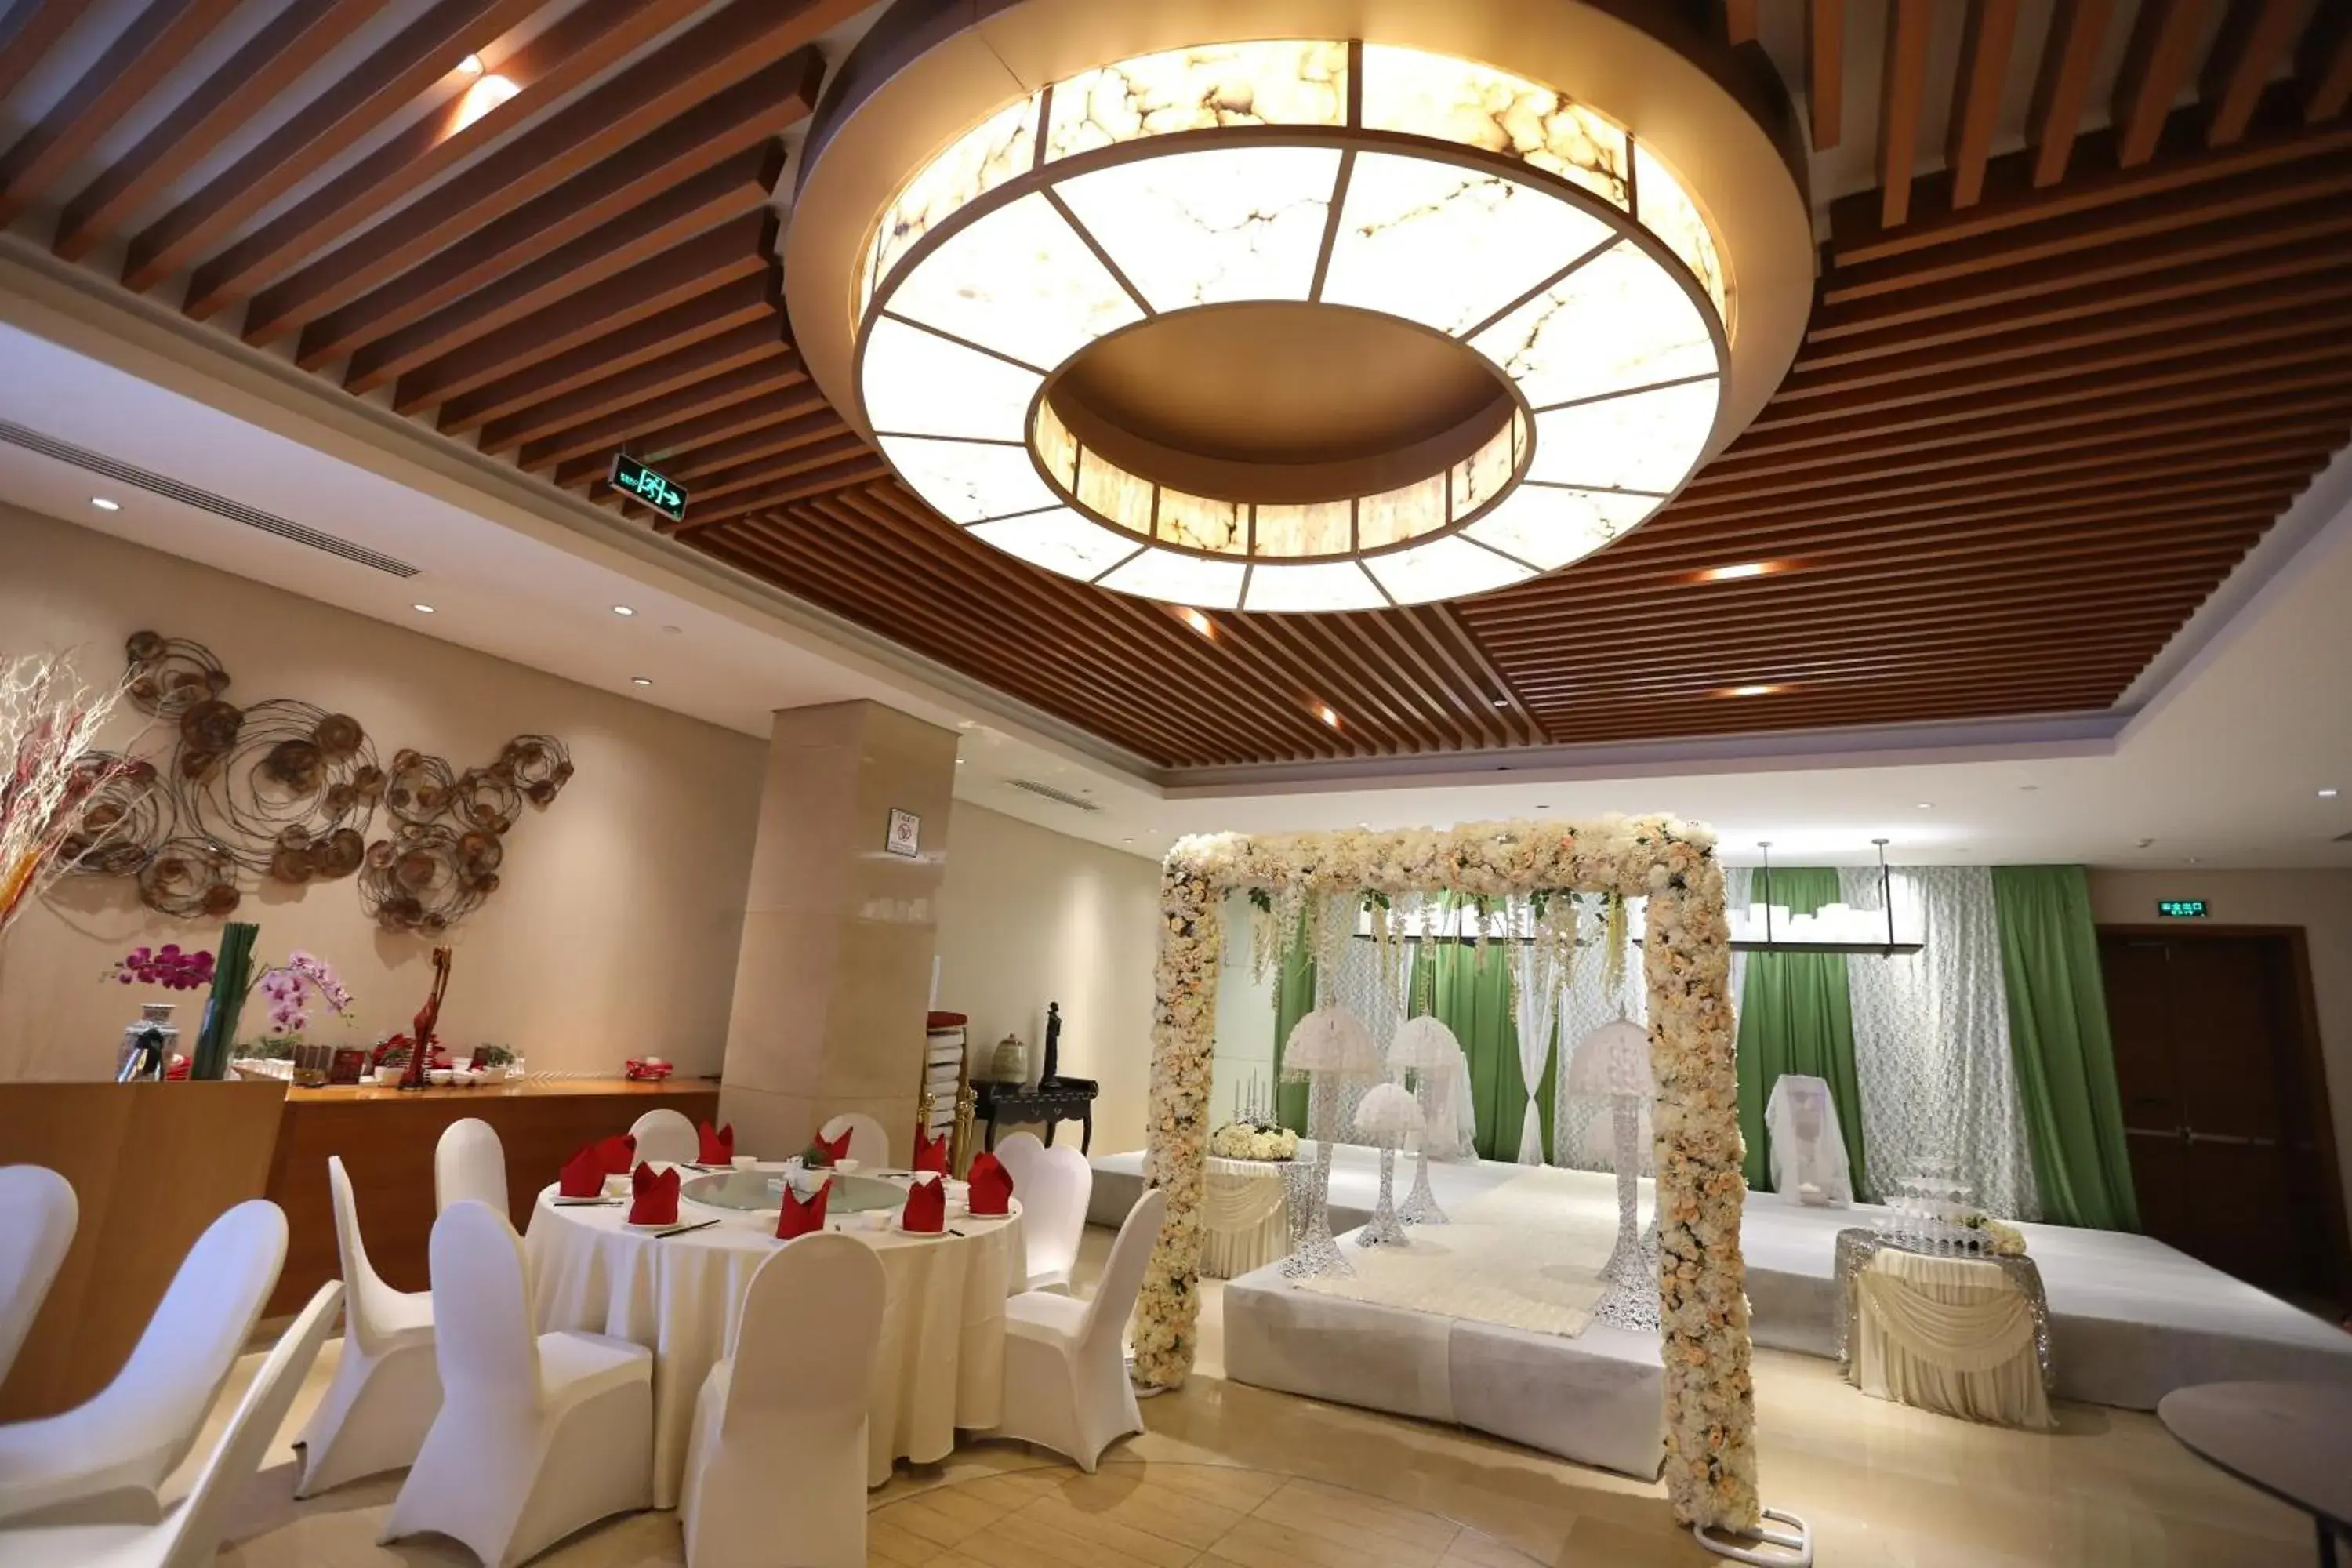 Restaurant/places to eat, Banquet Facilities in Radisson Hotel Tianjin Aqua City